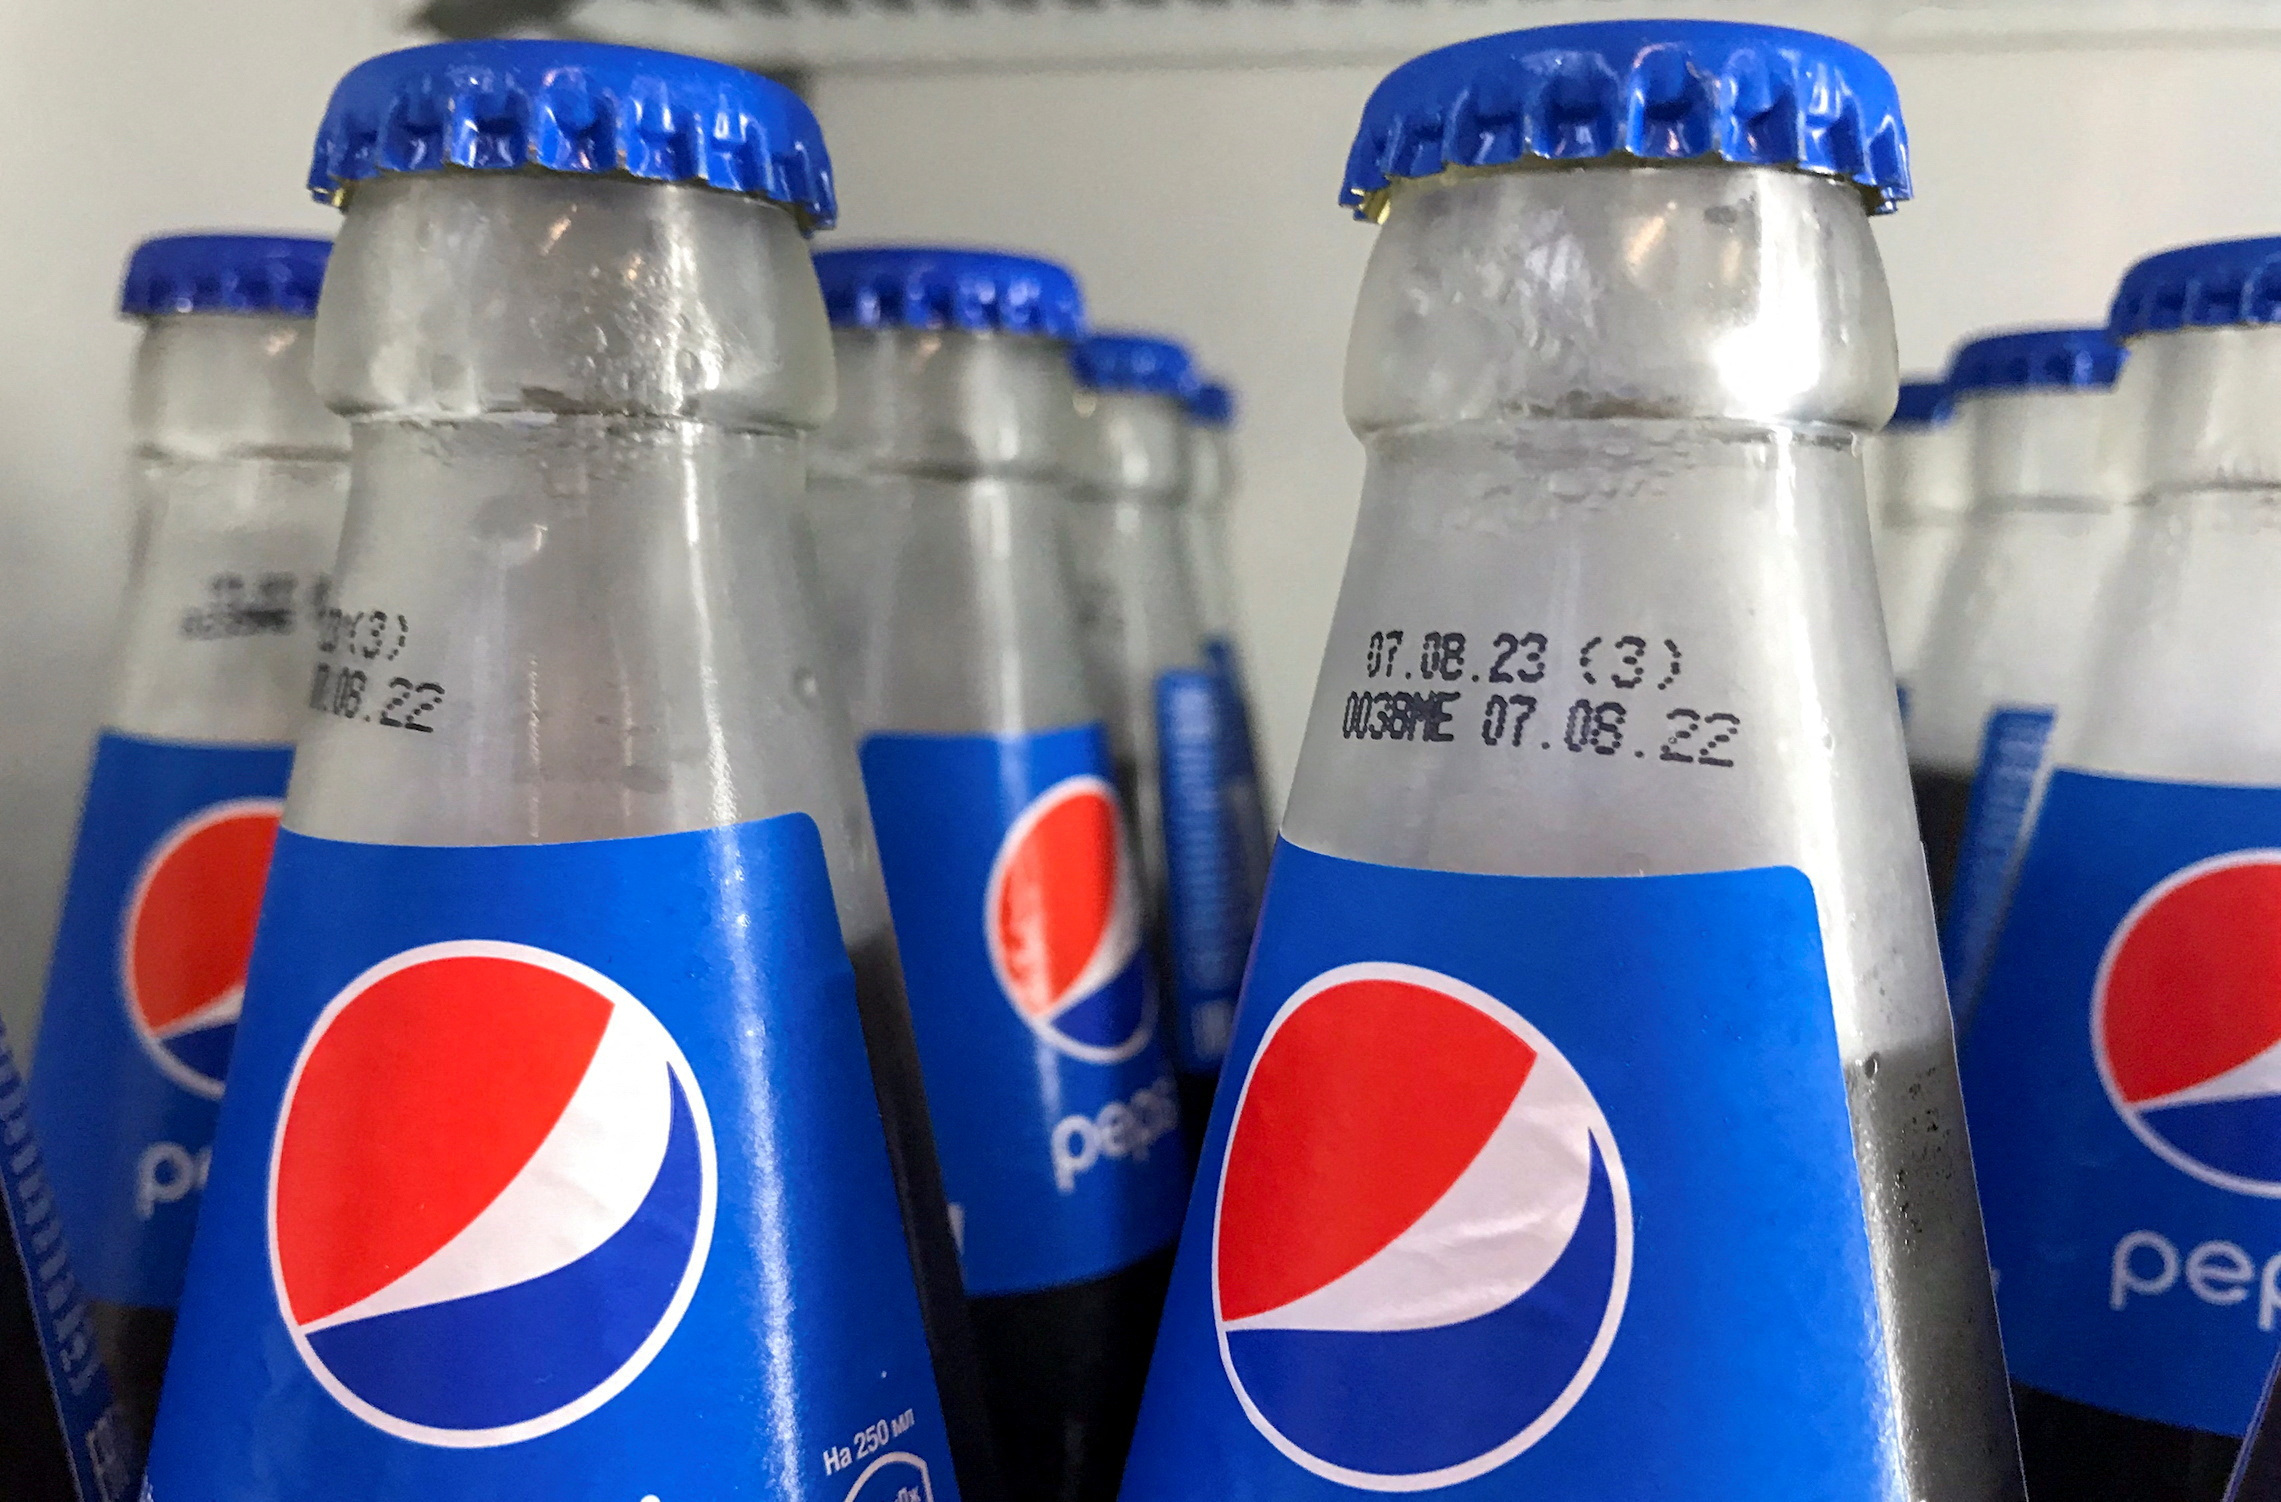 WHO aspartame warn on | change plans PepsiCo to has it to portfolio sweeteners says set no as Reuters its